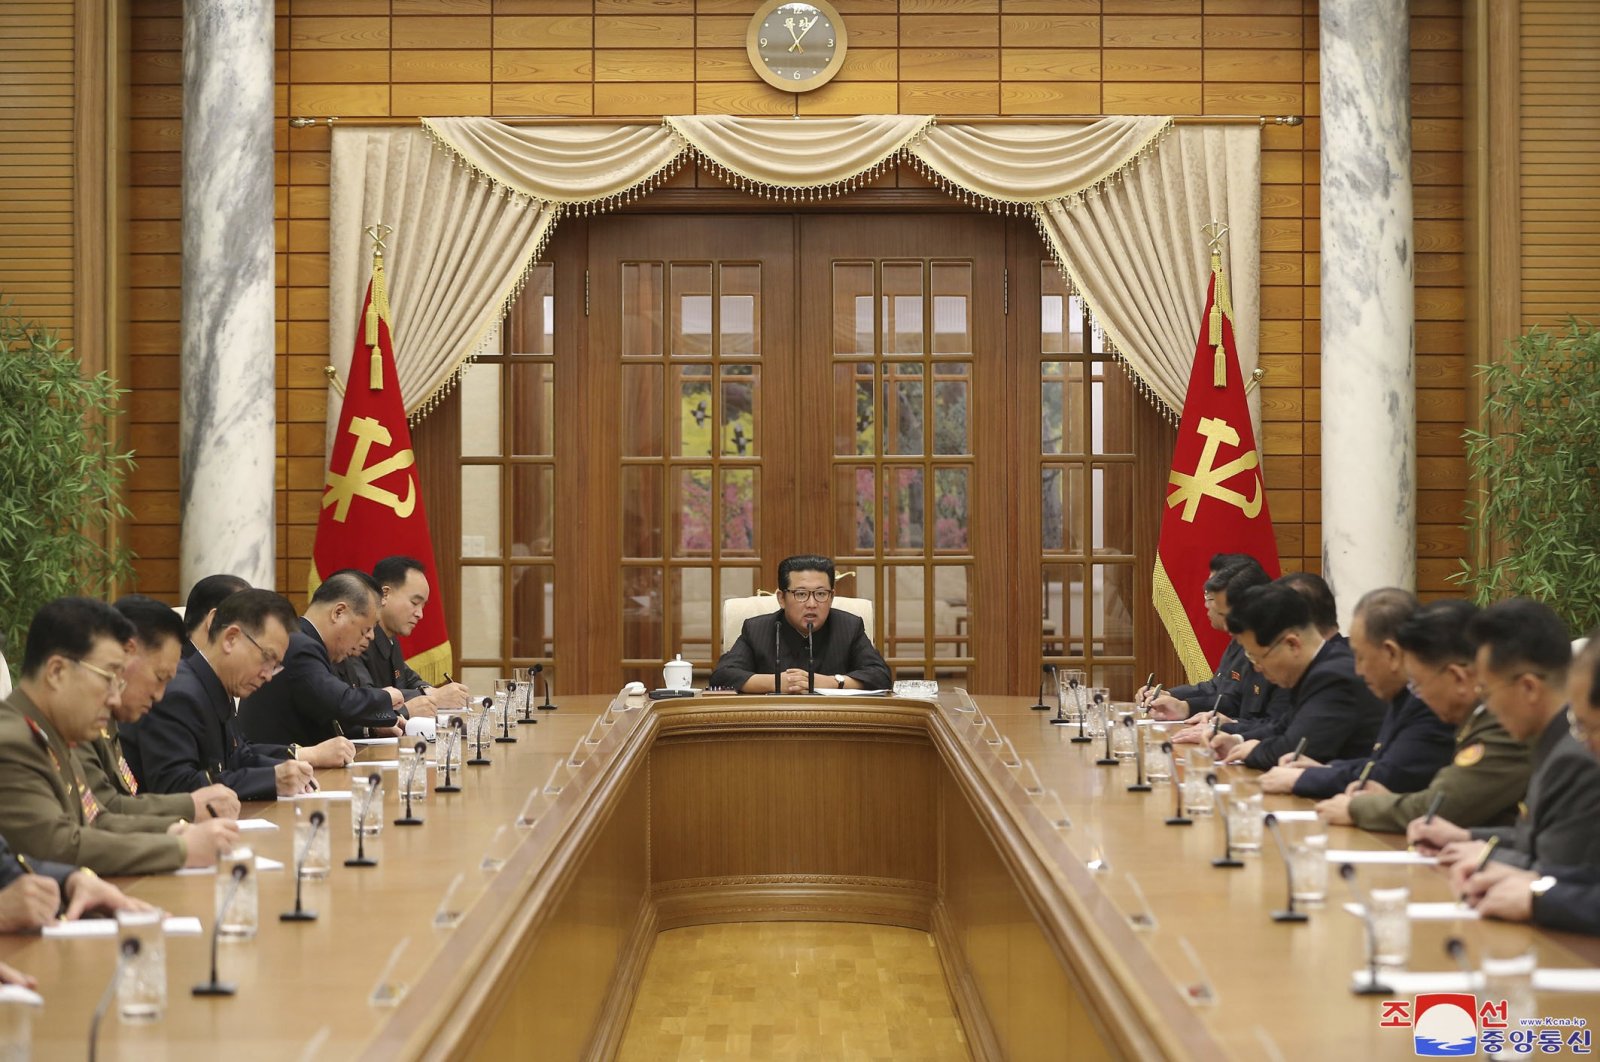 Kim Korea Utara mengatakan ‘perjuangan yang sangat besar’ ada di depan untuk kemajuan